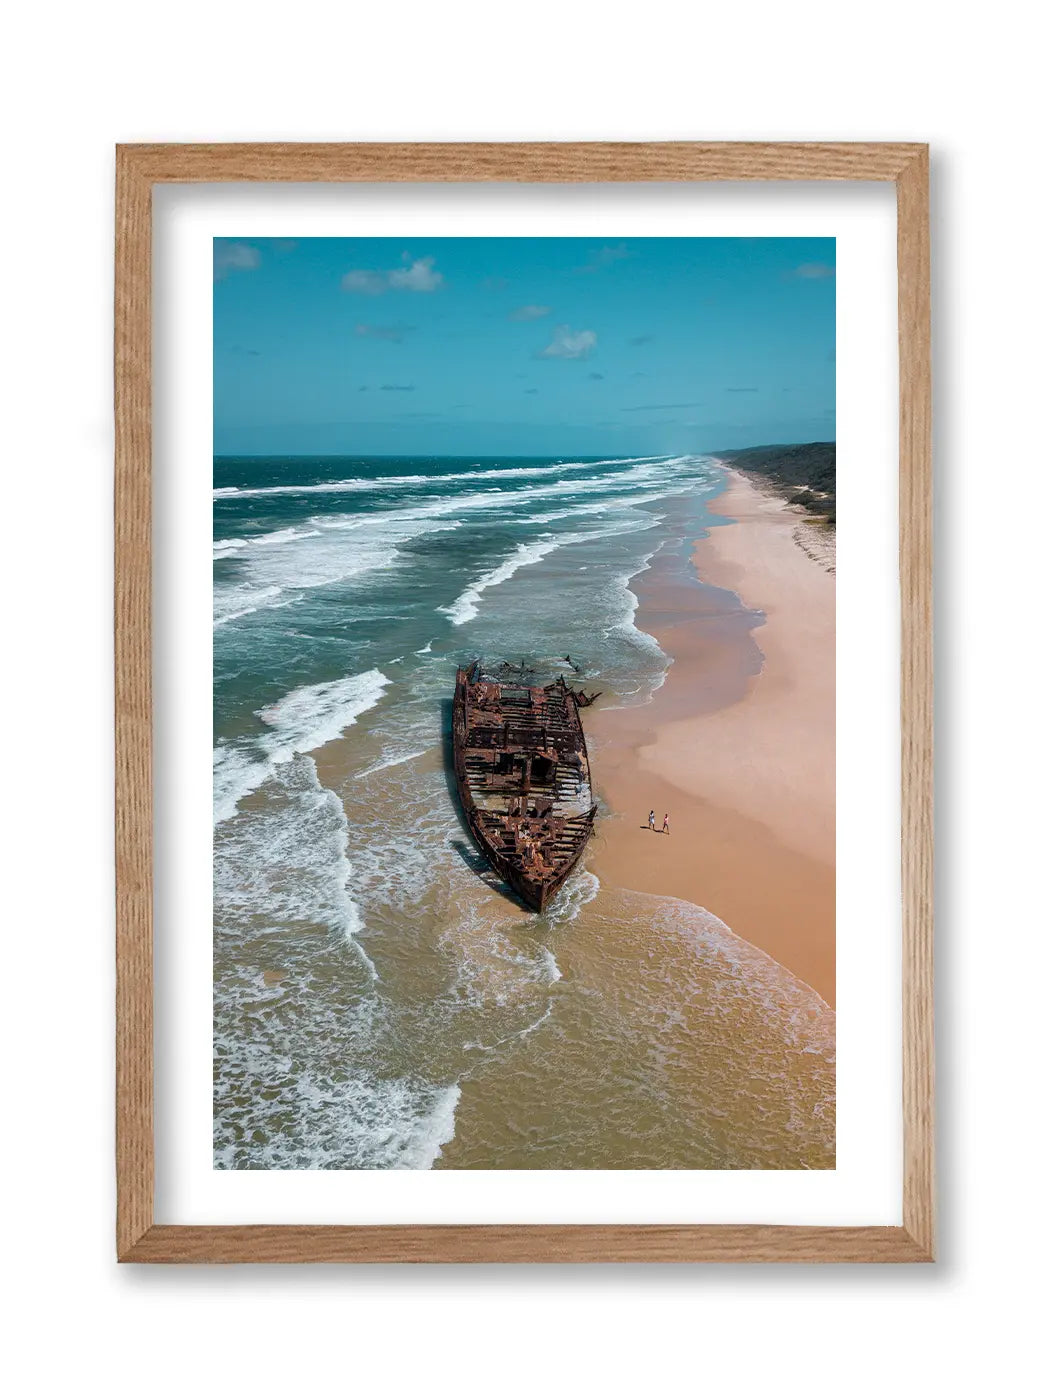 Fraser Island Shipwreck